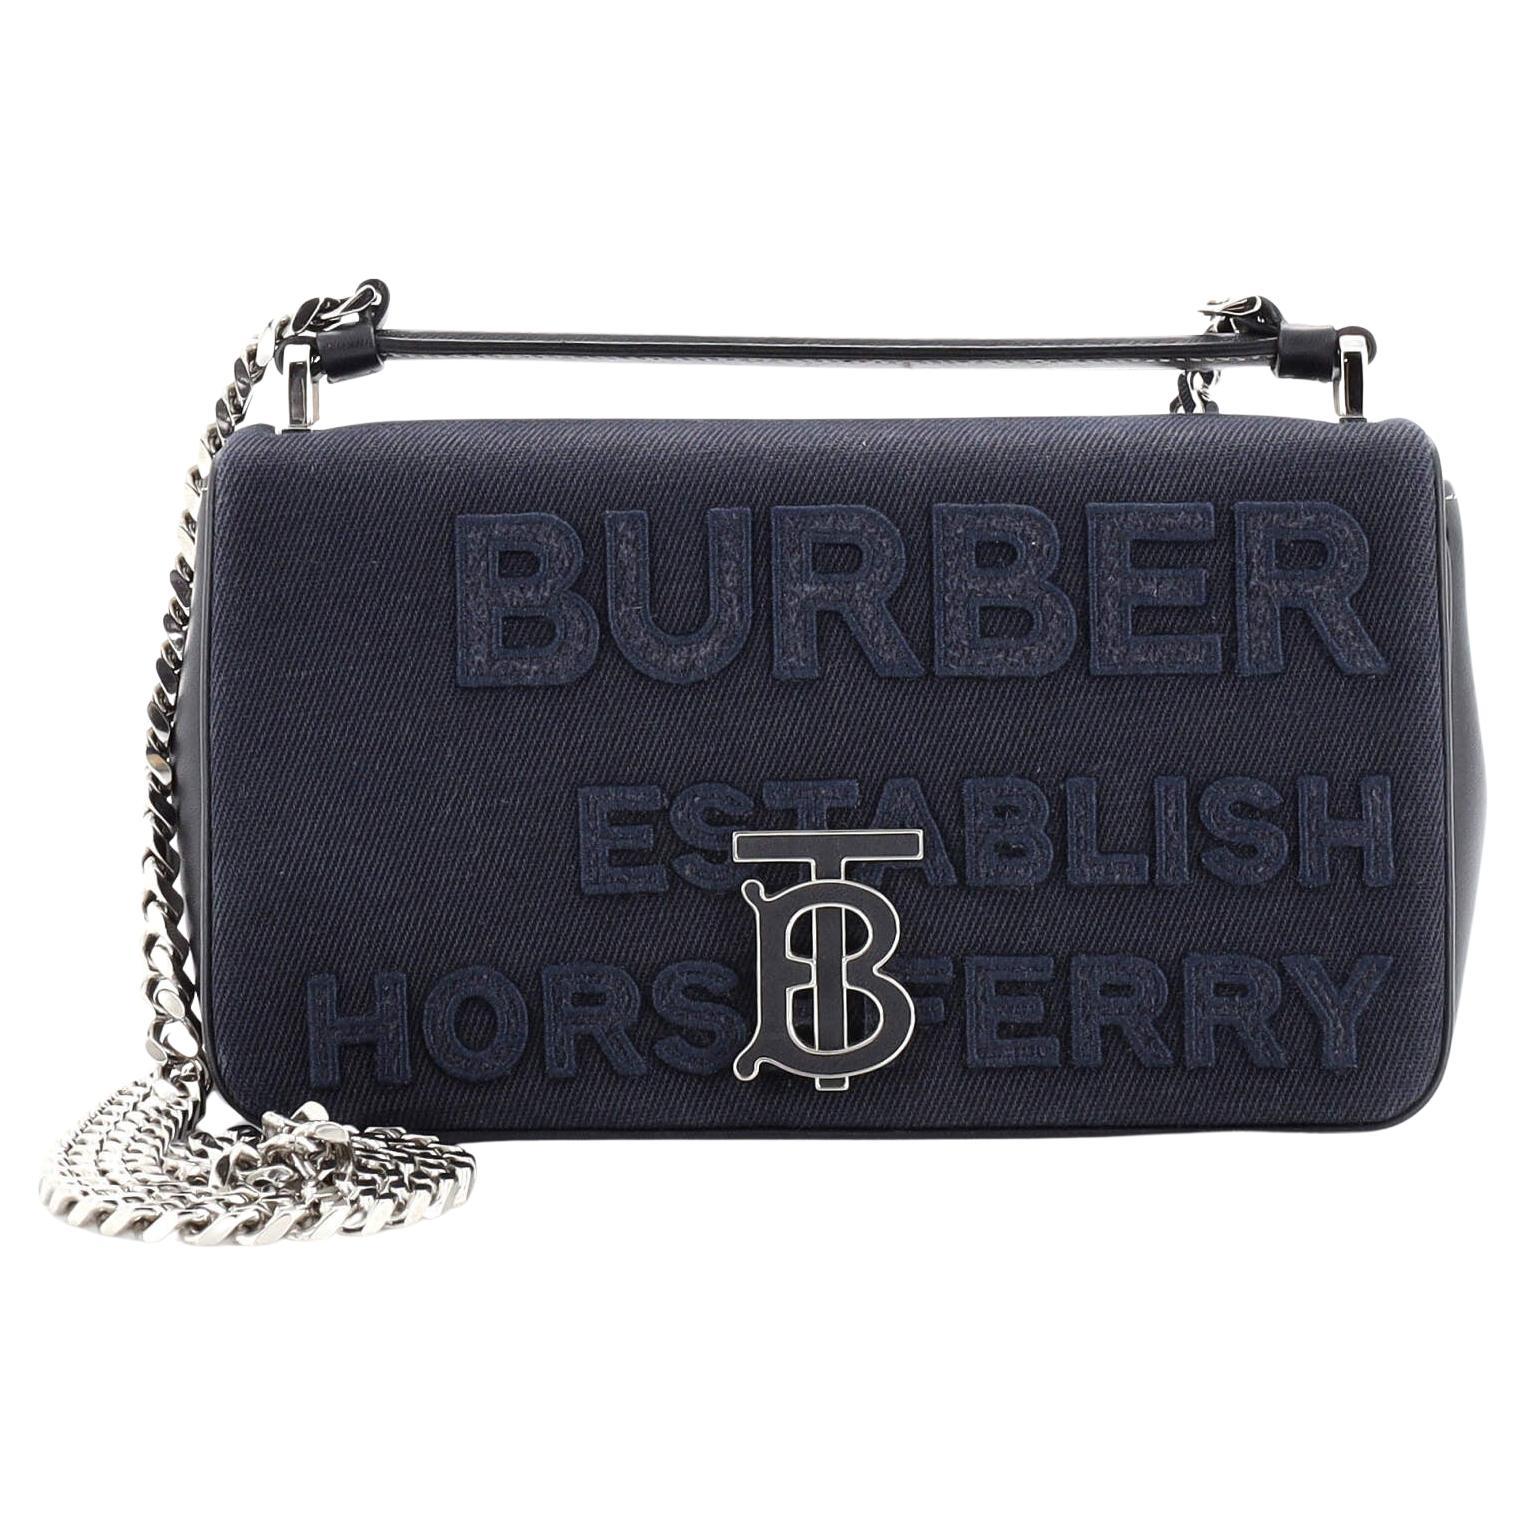 Burberry Lola - Shoulder bag for Woman - Black - 8059509-A1189